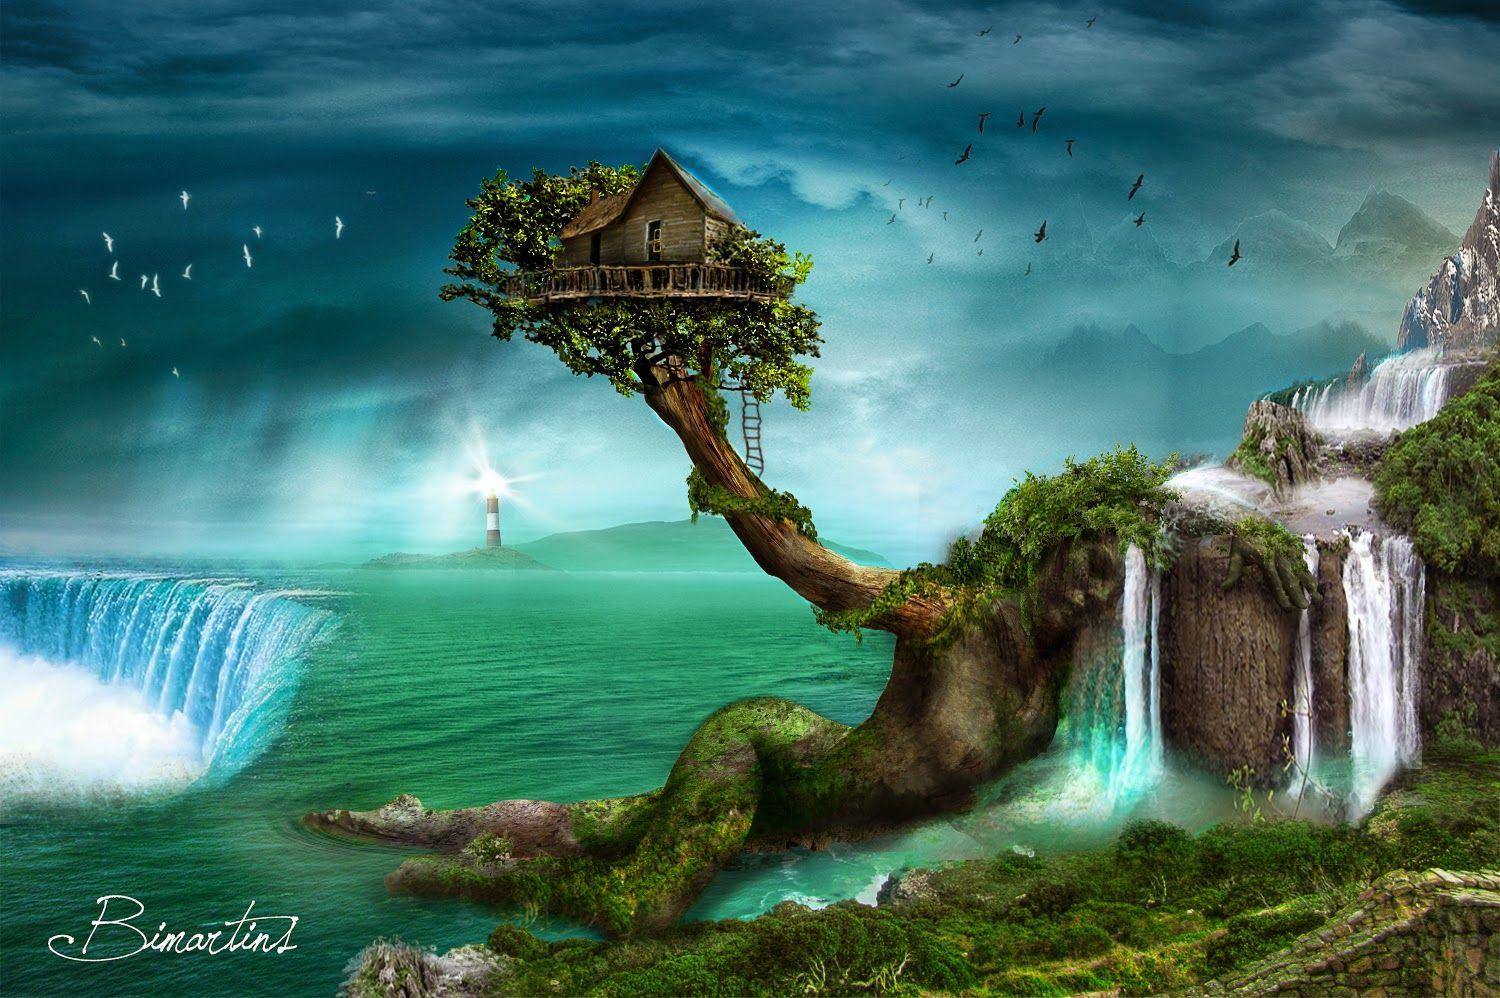 PIXHOME: Beautiful Tree House fantasy fairy tale image picture